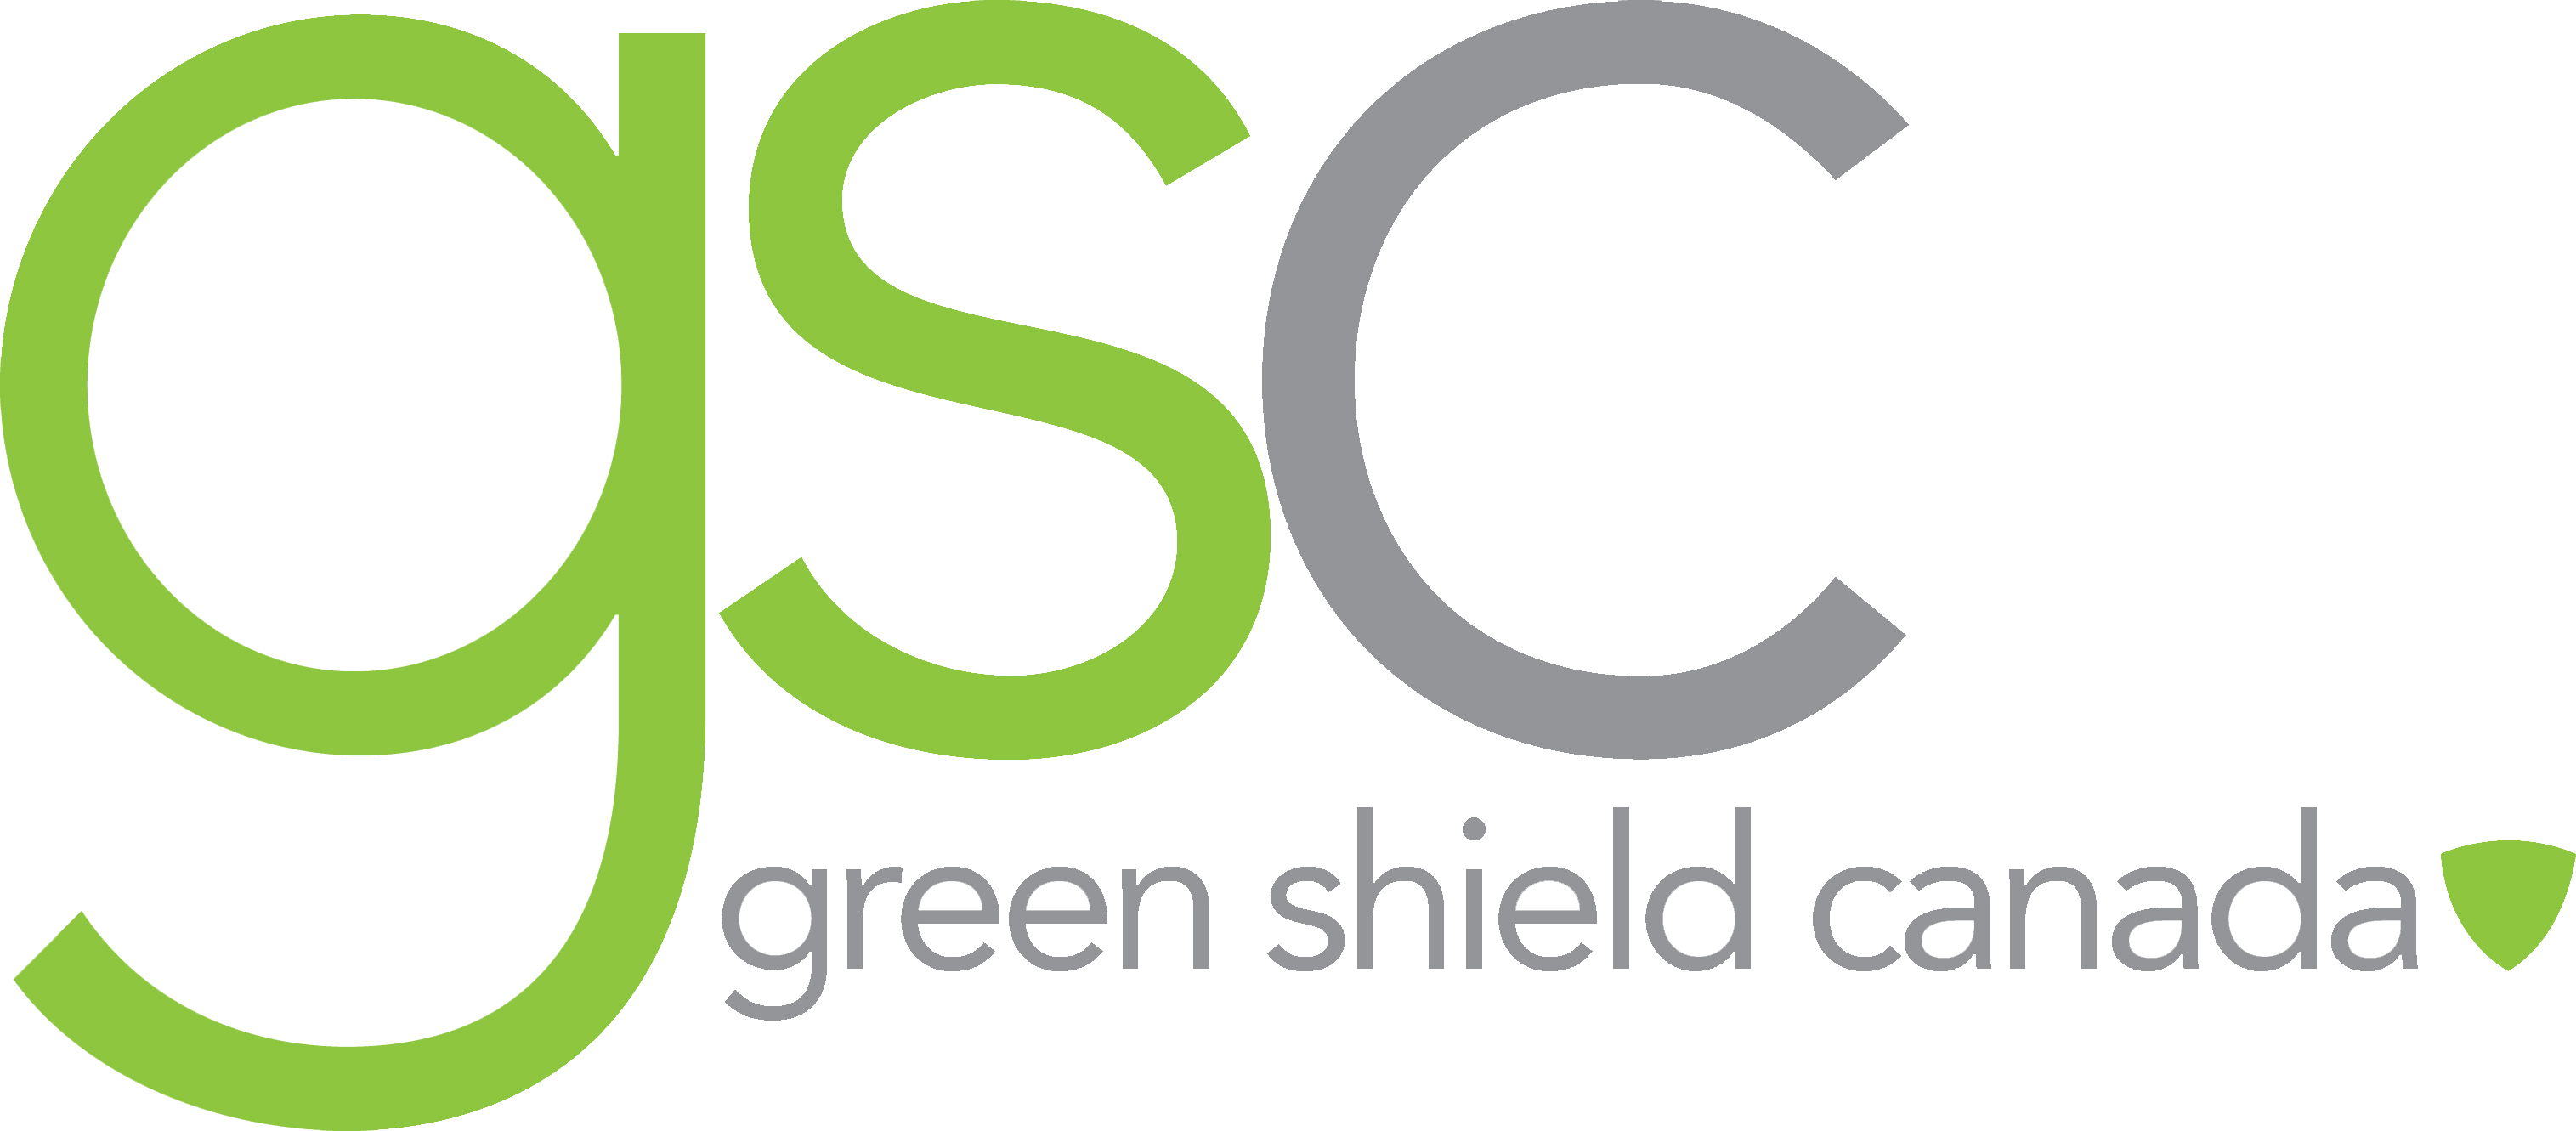 kisspng-green-shield-canada-insurance-logo-clip-art-brand